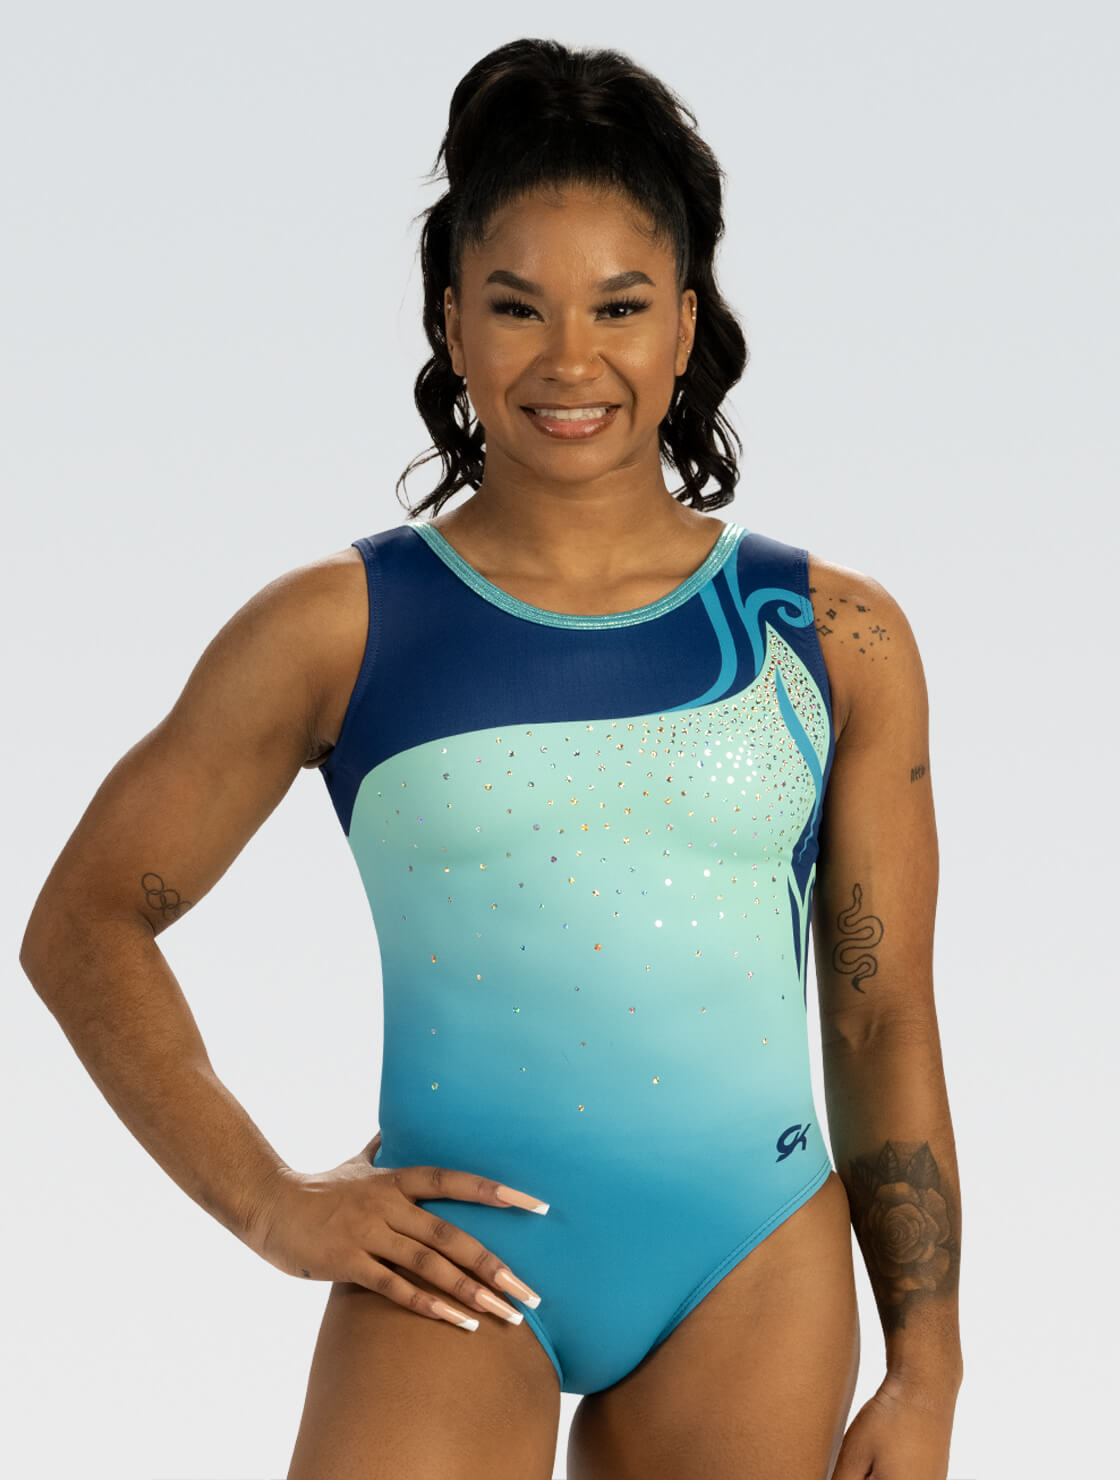 GK Elite Jewelled Gymnastic Tank Leotard - 3824 Womens - Delicate Blue Print